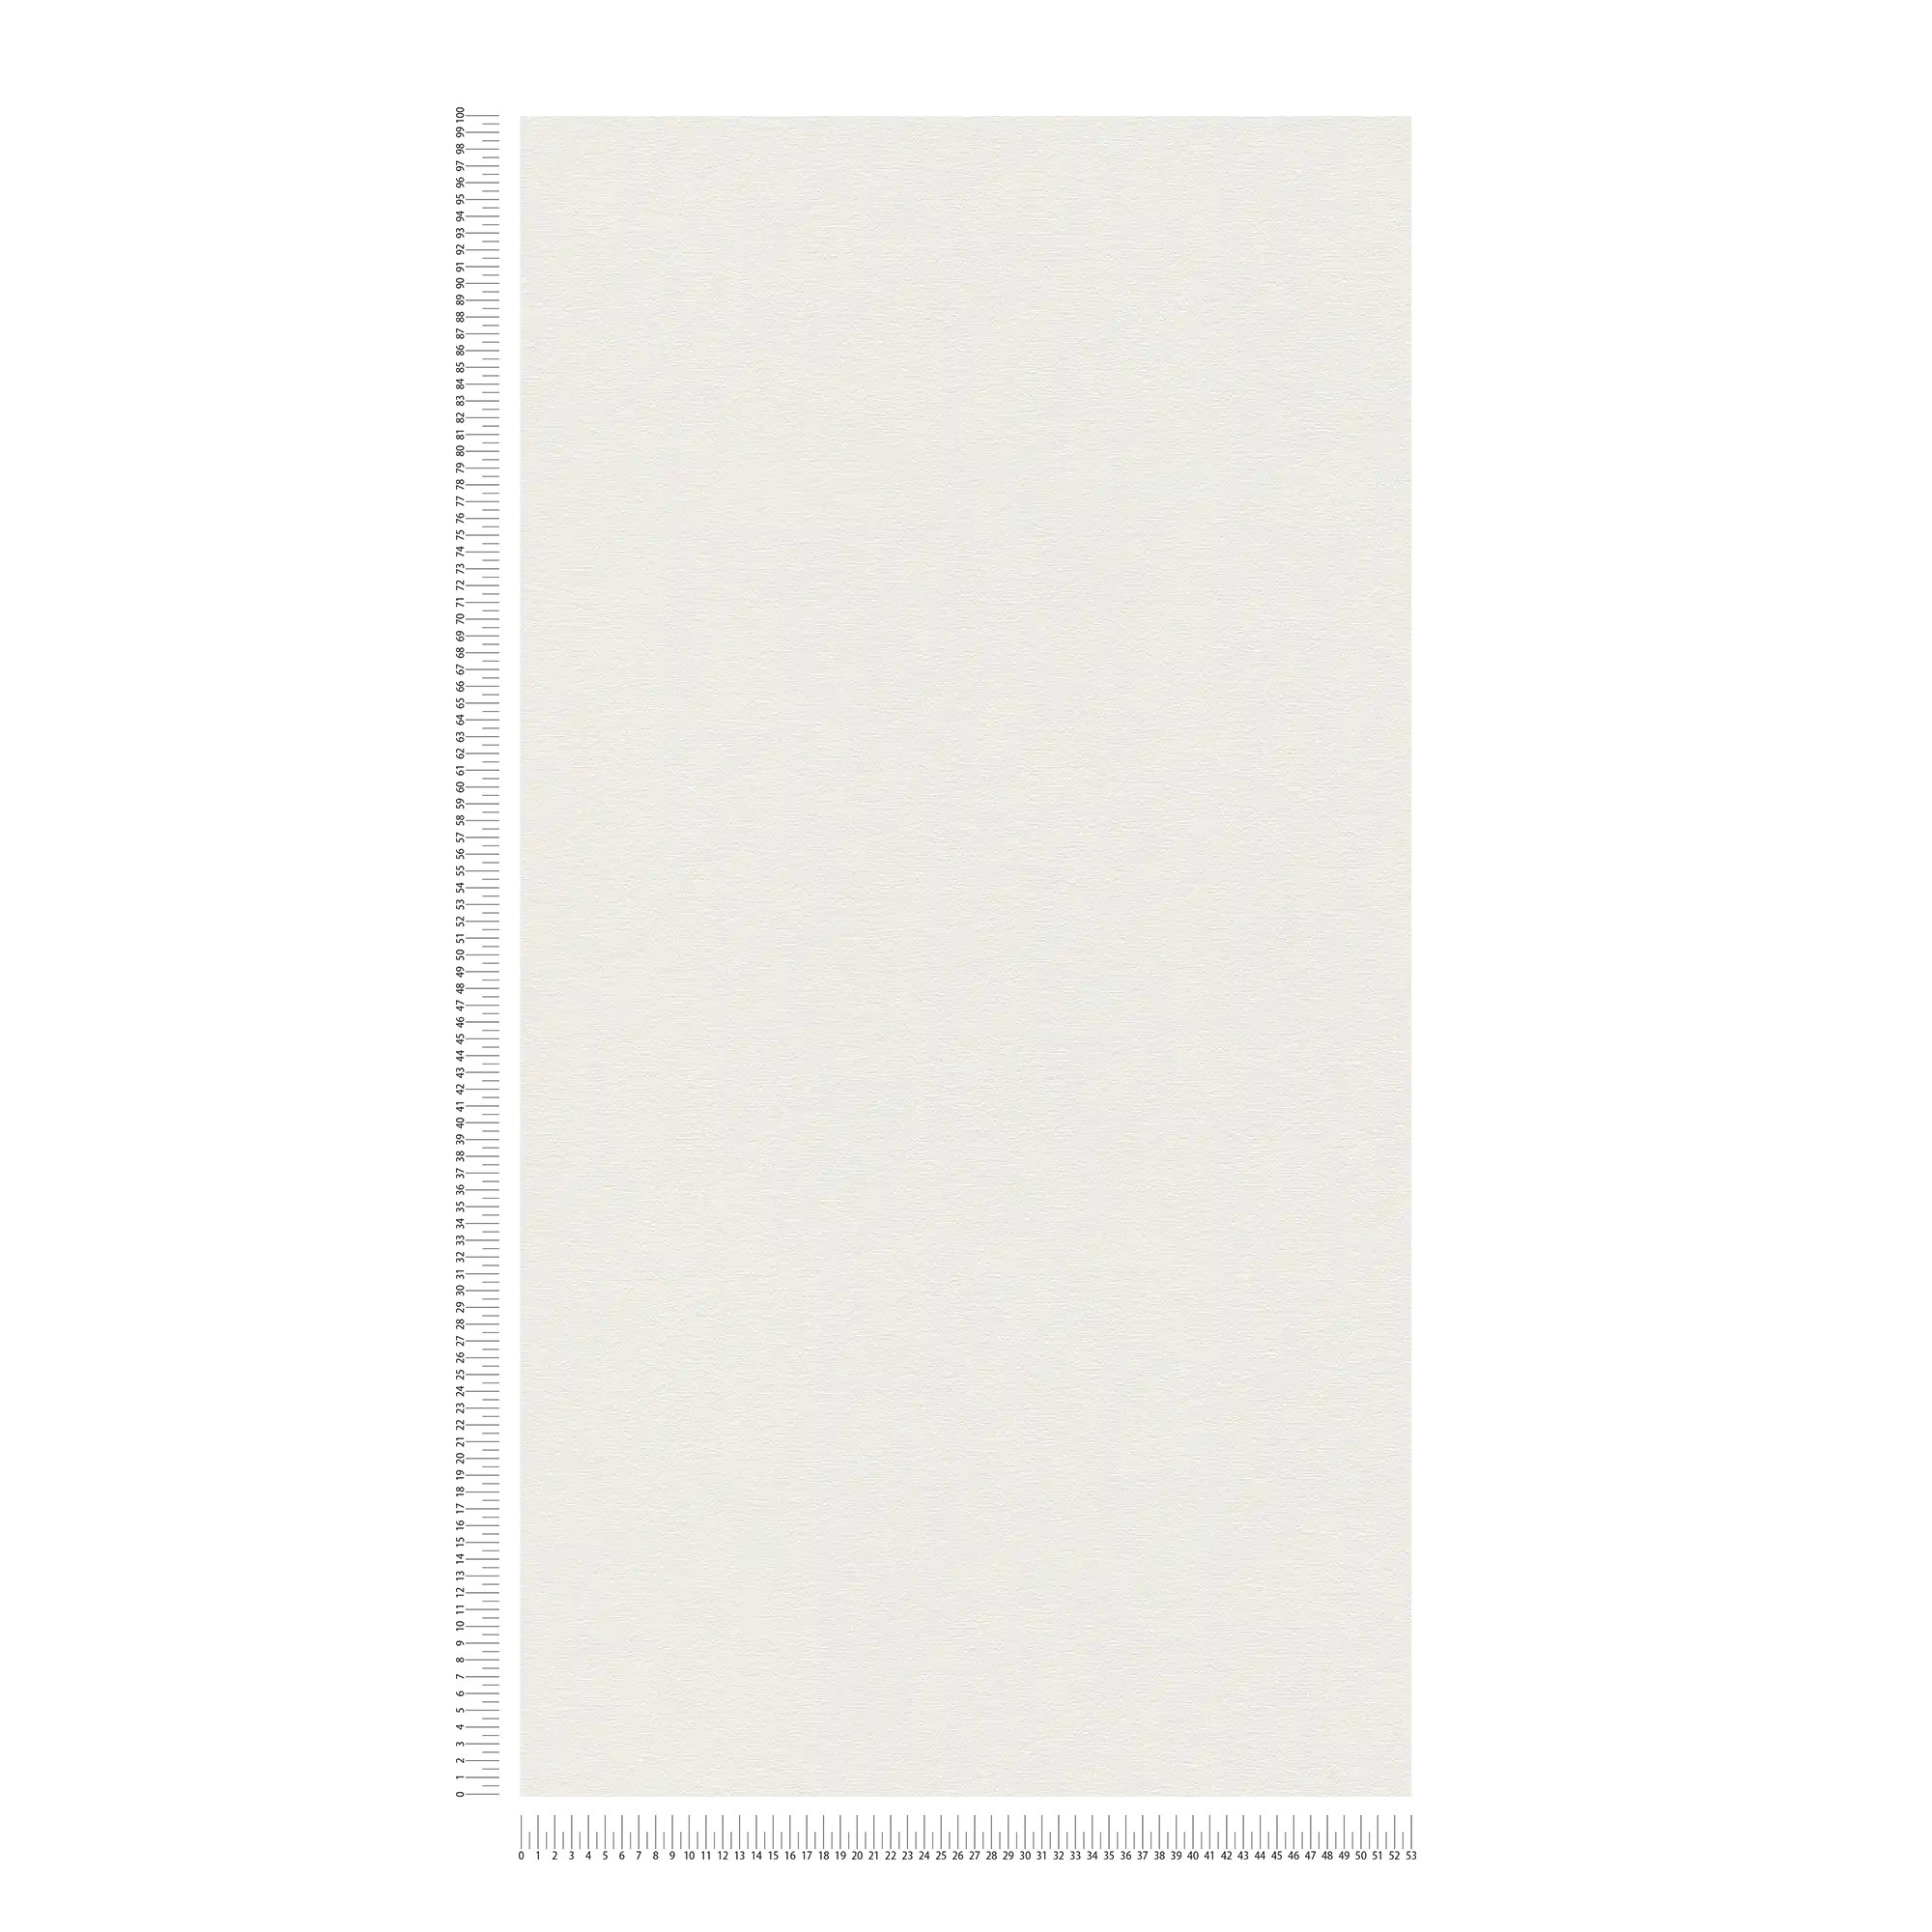             Papel pintado unitario ligeramente texturizado en aspecto mate - blanco, crema
        